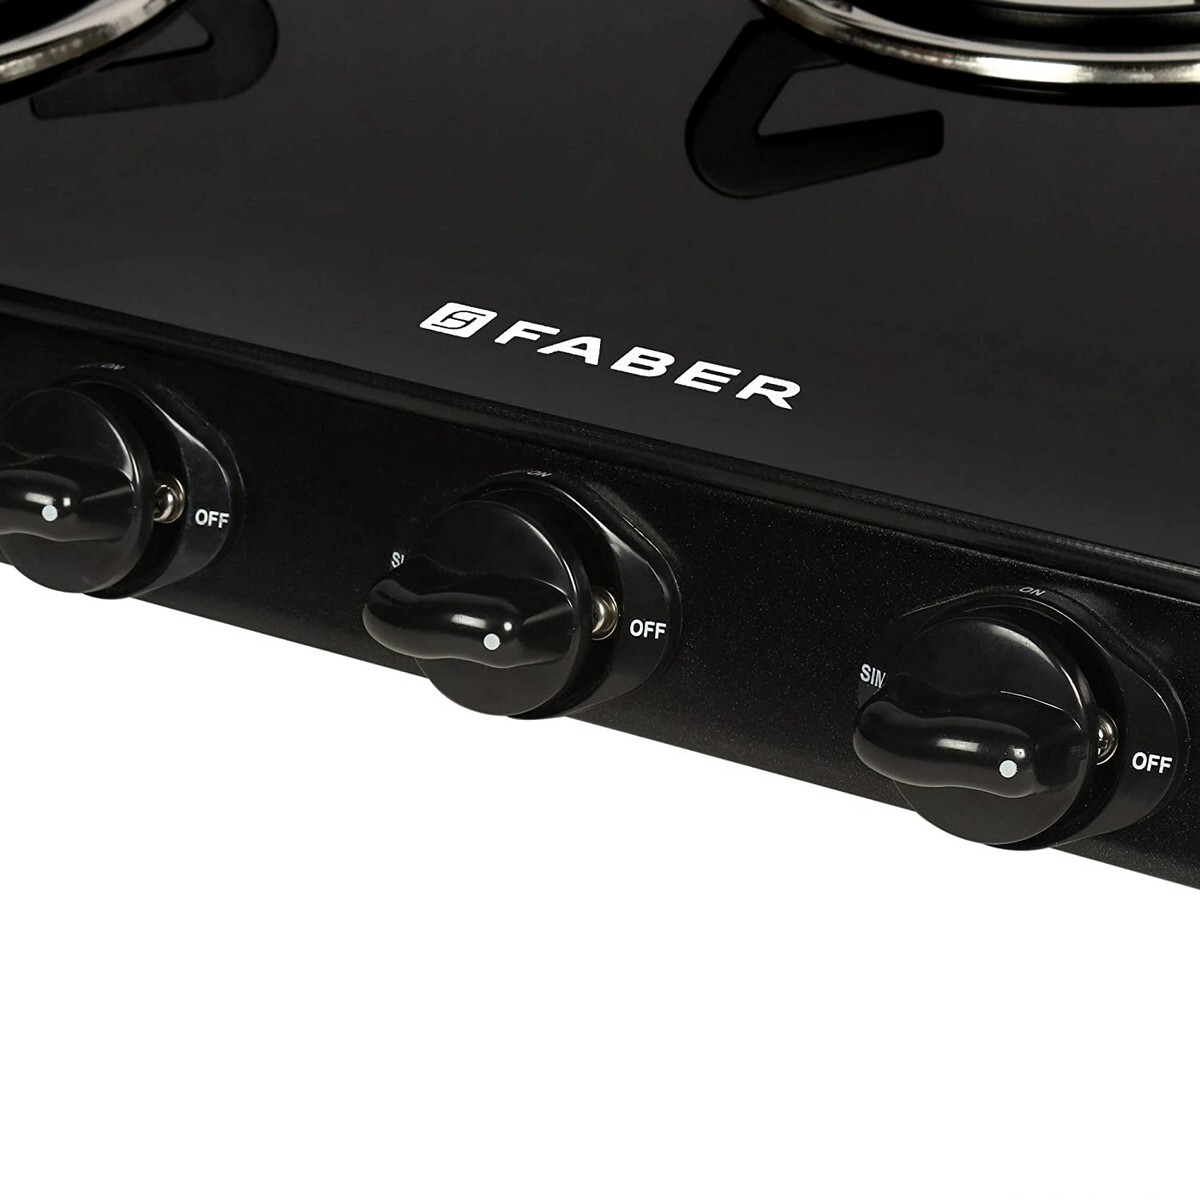 Faber Gas stove 3 Burner Glass Cooktop Jumbo 3BB Black